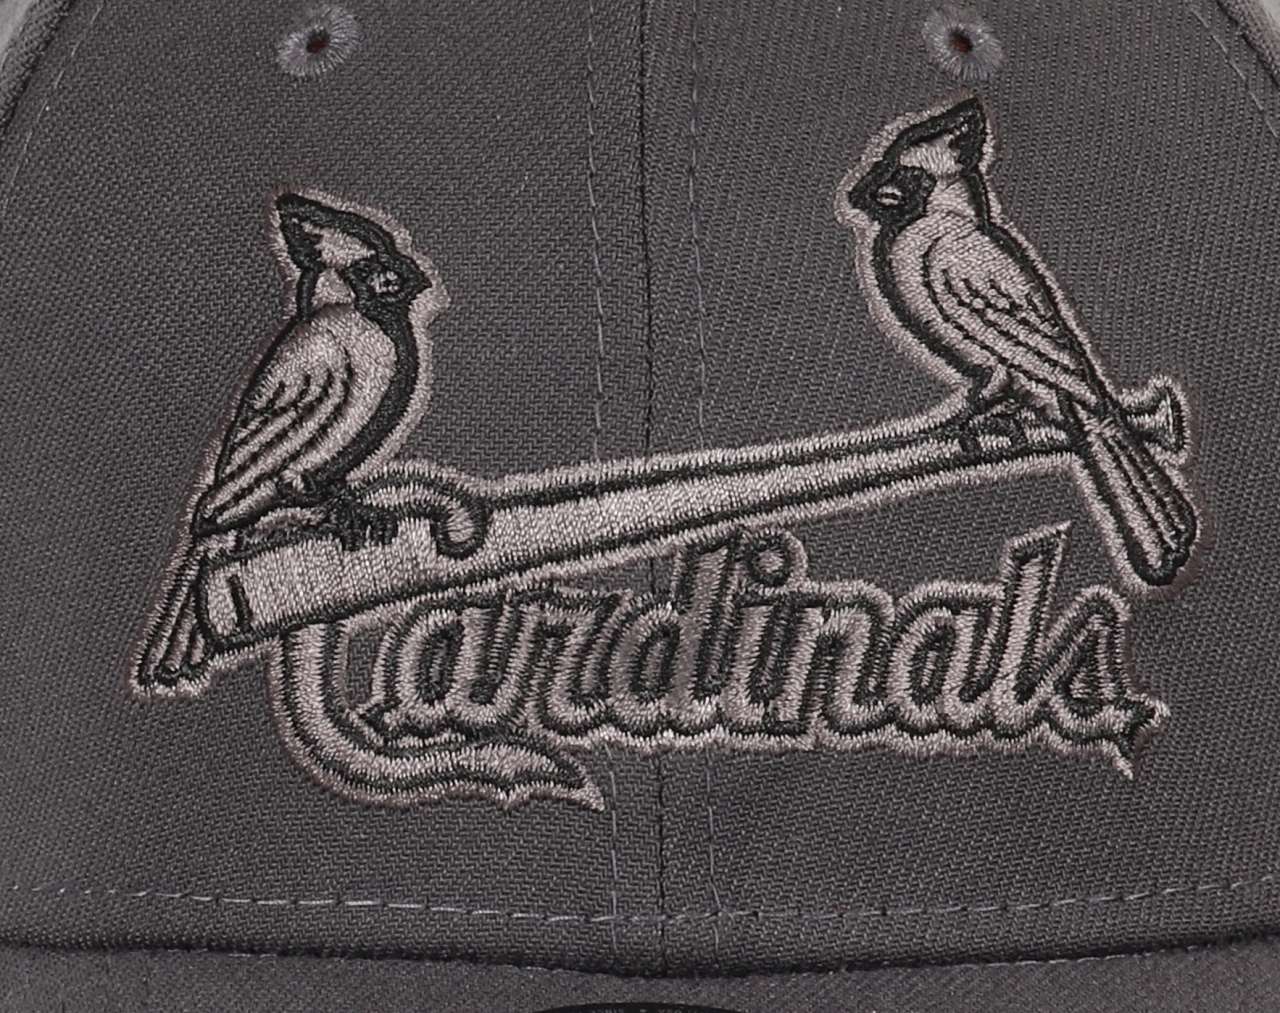 St. Louis Cardinals MLB Graphene 39Thirty Stretch Cap New Era